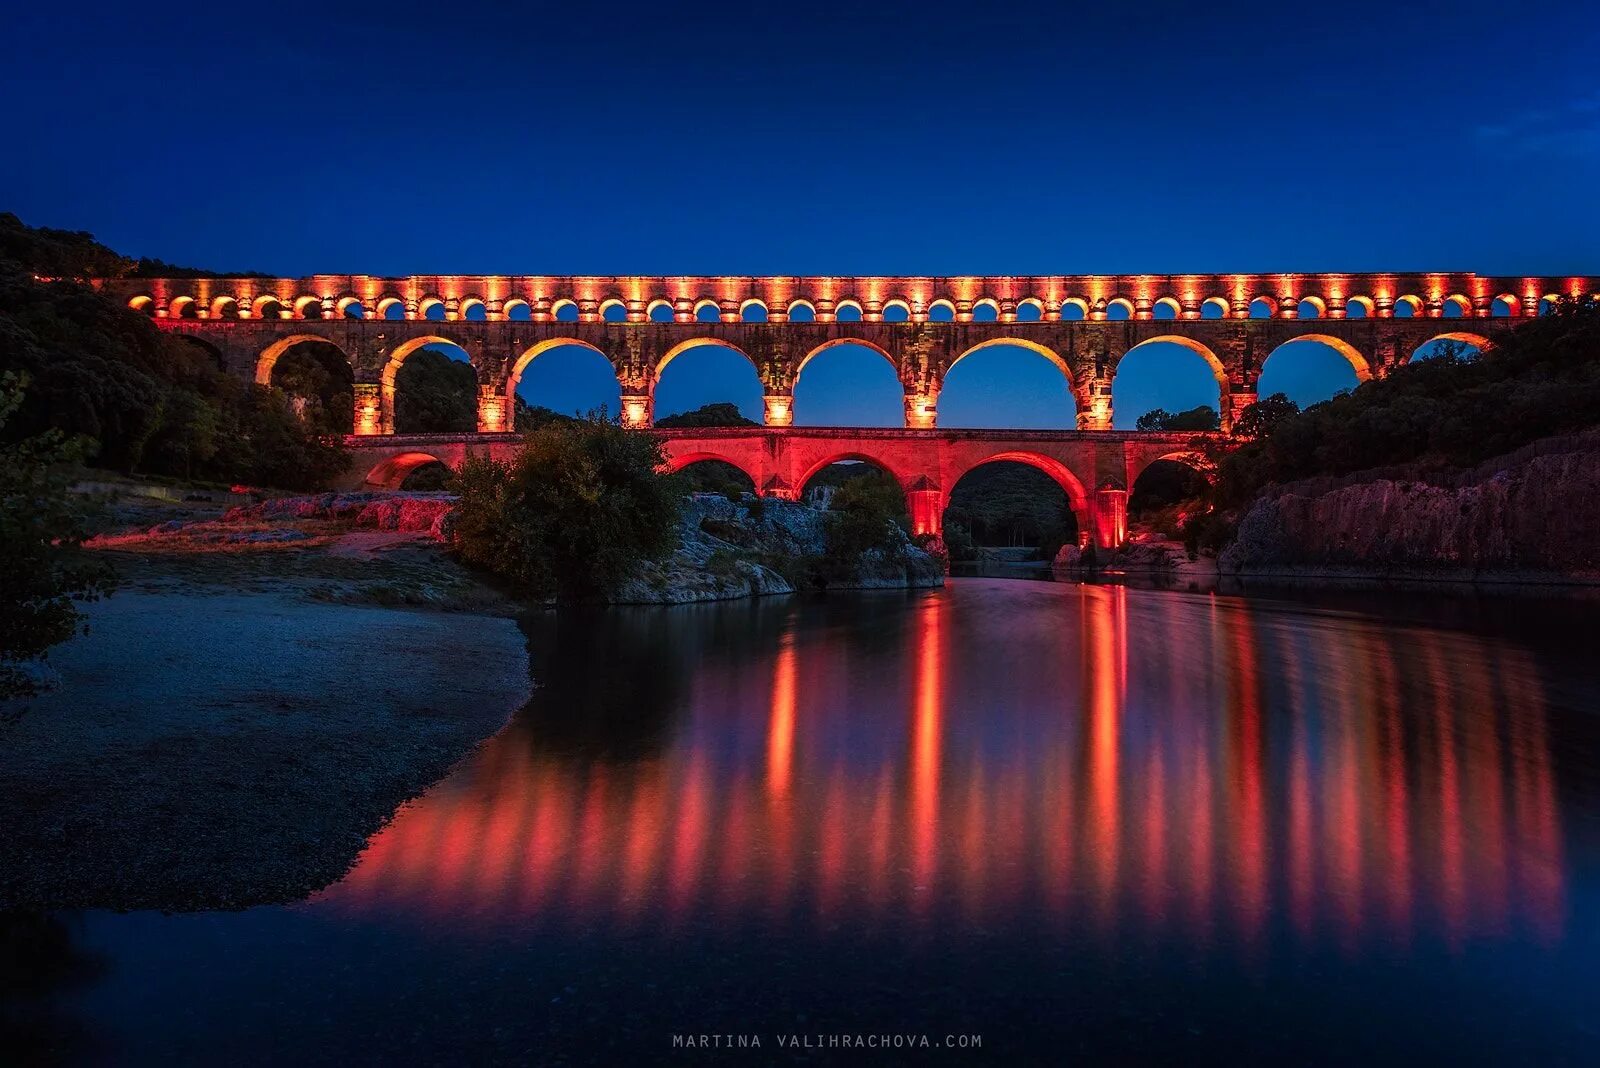 Пон вид. Пон-дю-гар Франция. Мост Пон дю гар во Франции. Римский акведук во Франции. Гардский мост Пон-дю-гар.